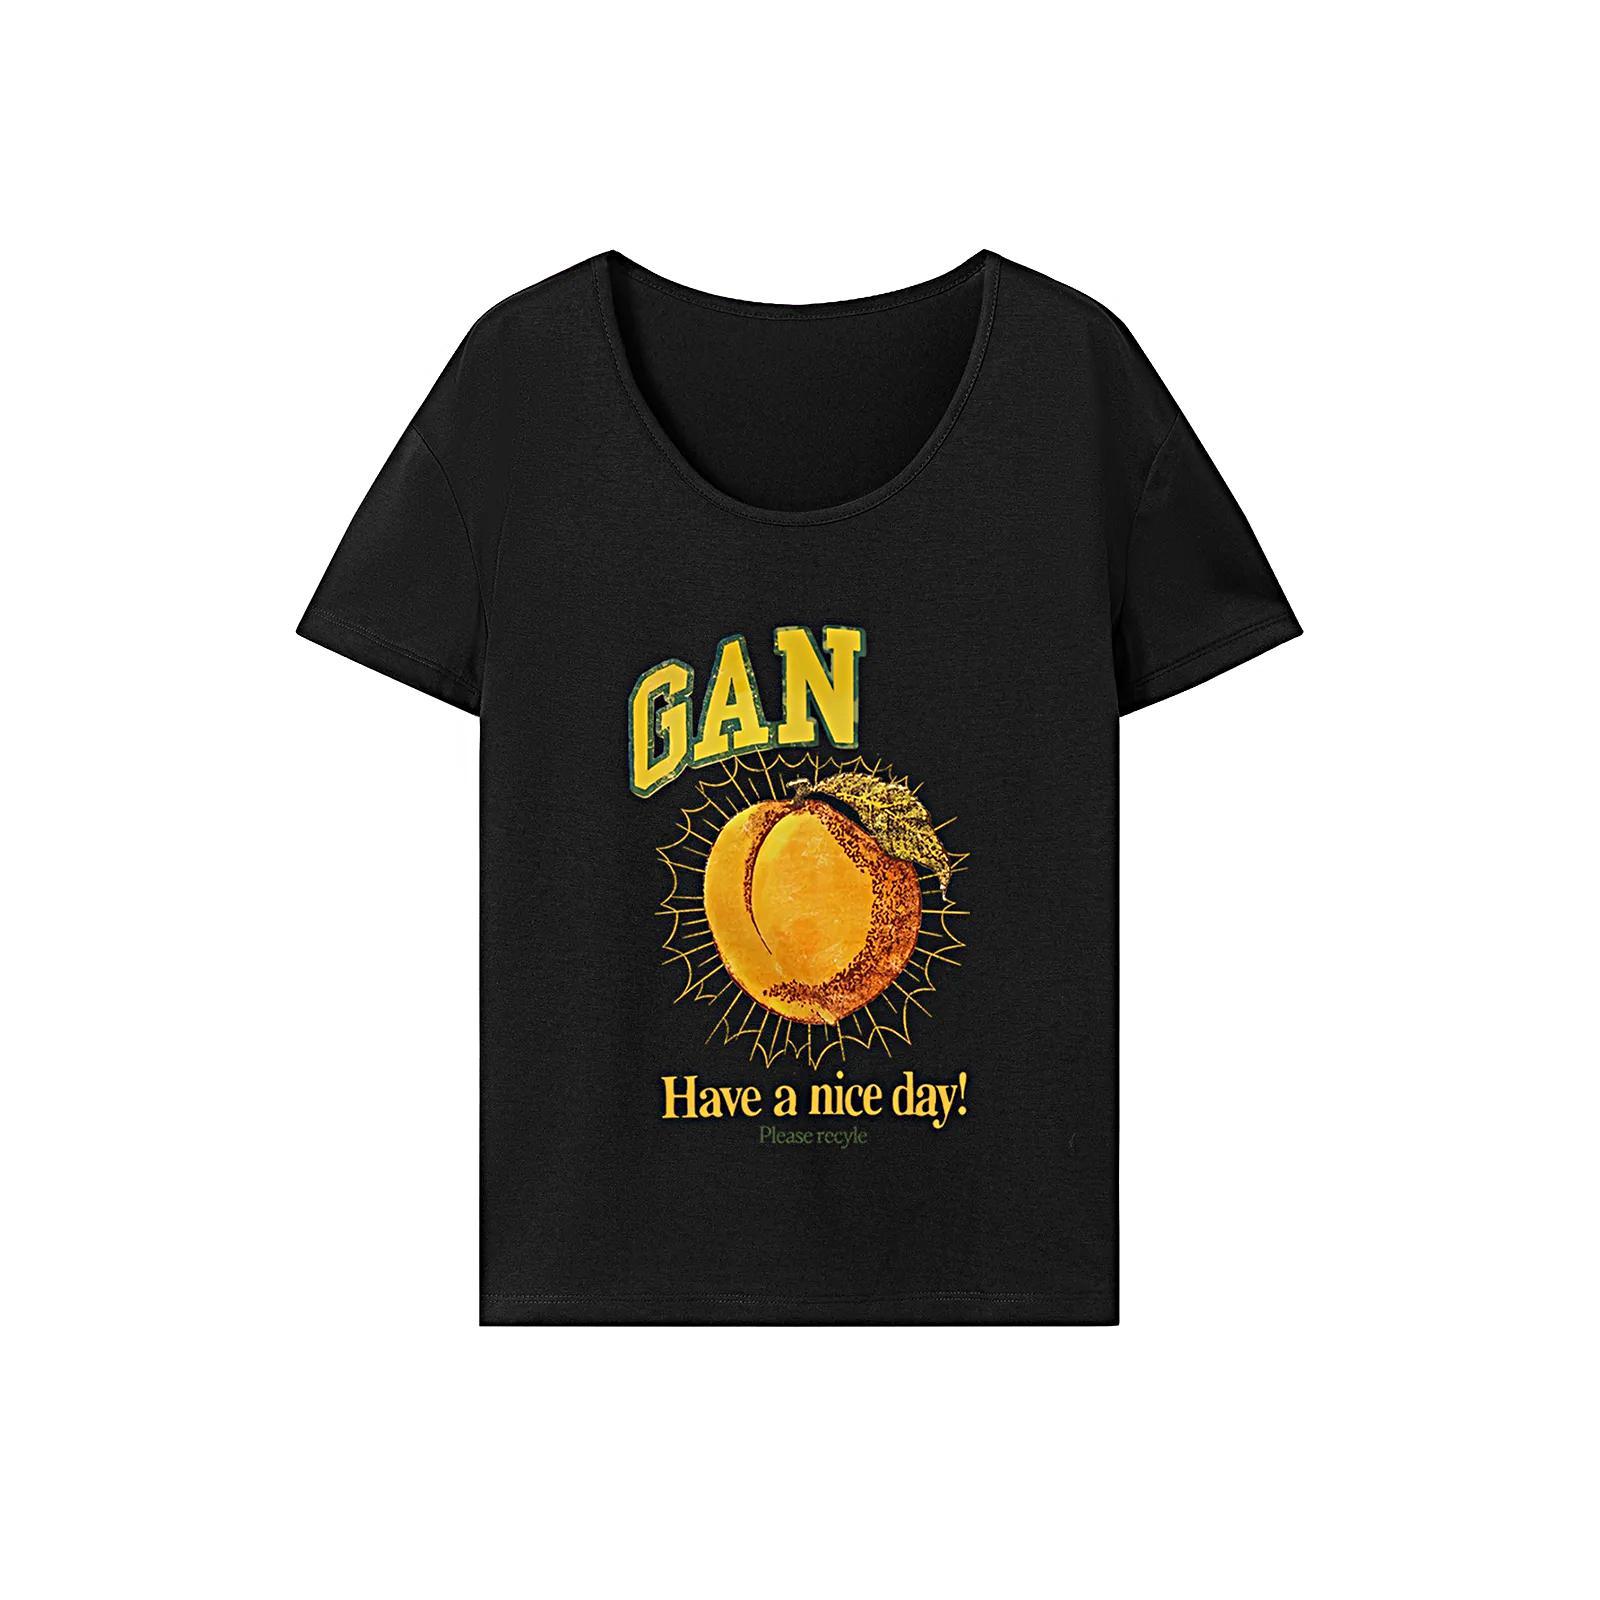 Women's T Shirt Summer Casual Basic Tee Shirt for Commuting Daily Wear Beach S